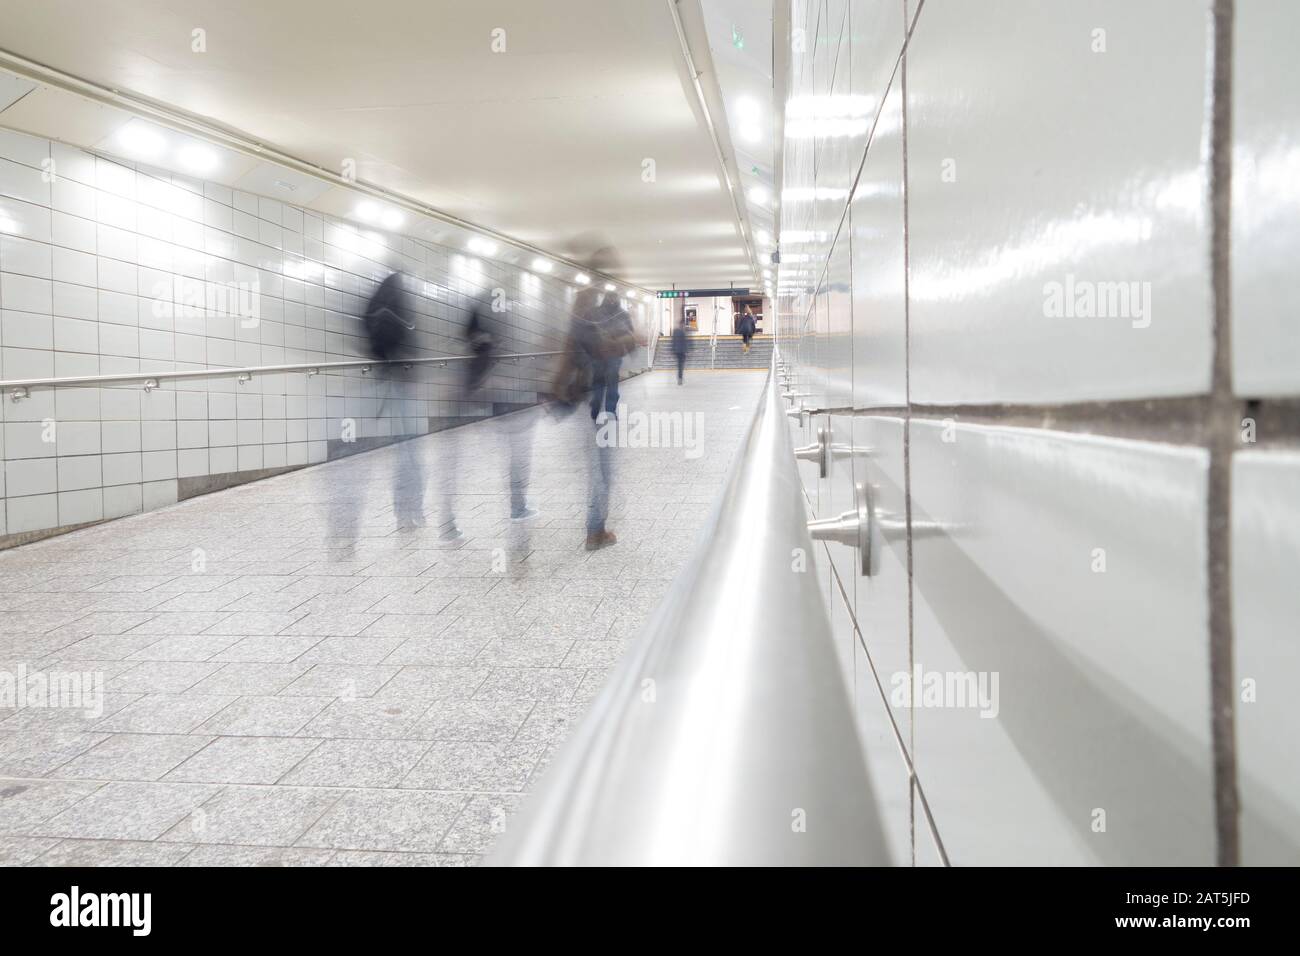 people in motion blur walking down bright white tiled tunnel walkway to subways transit Stock Photo